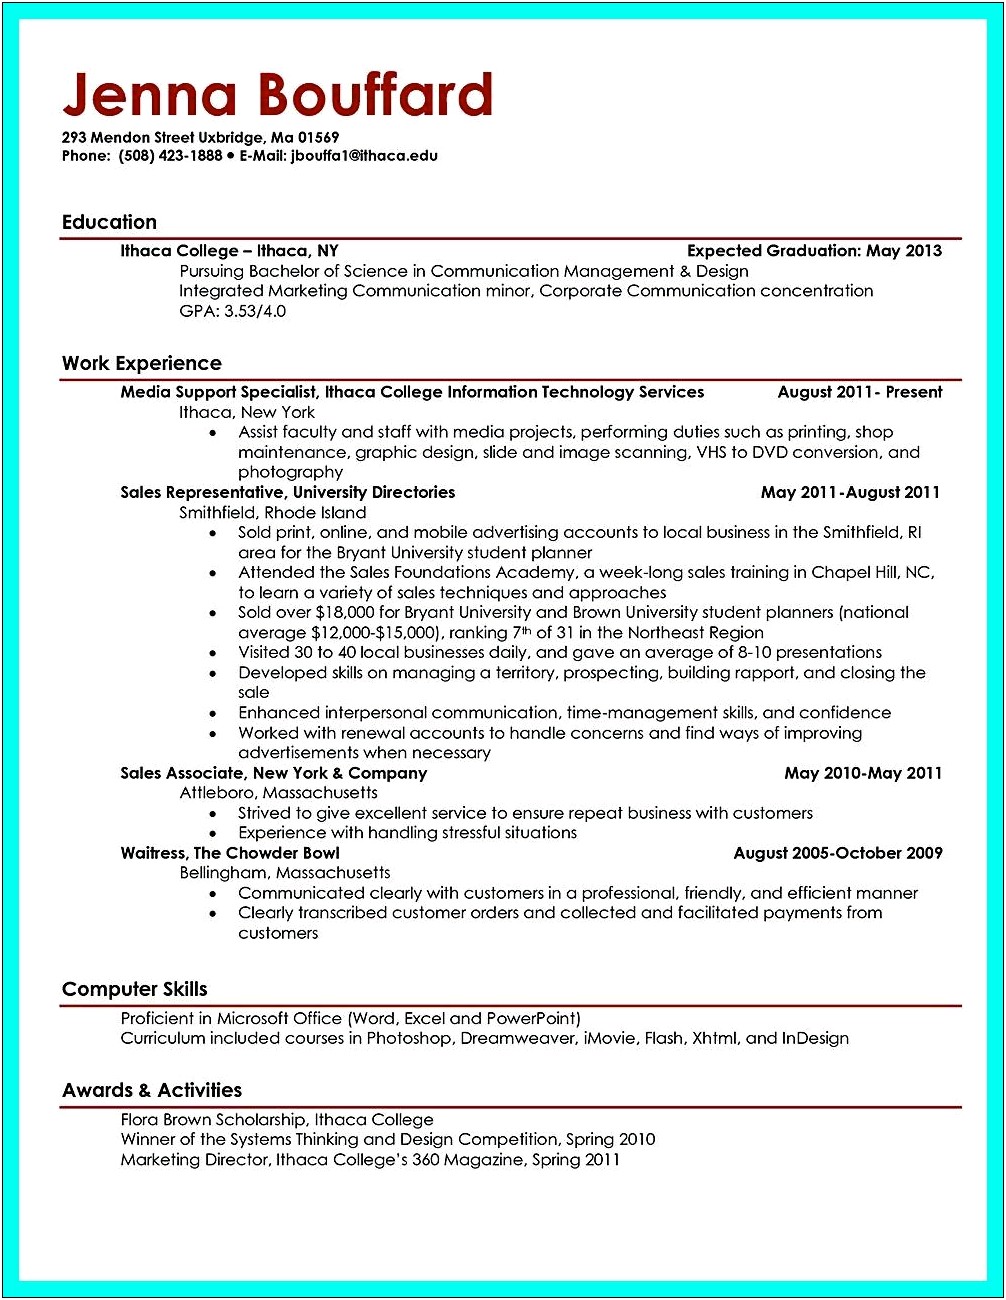 Resume Profile Examples For College Graduates